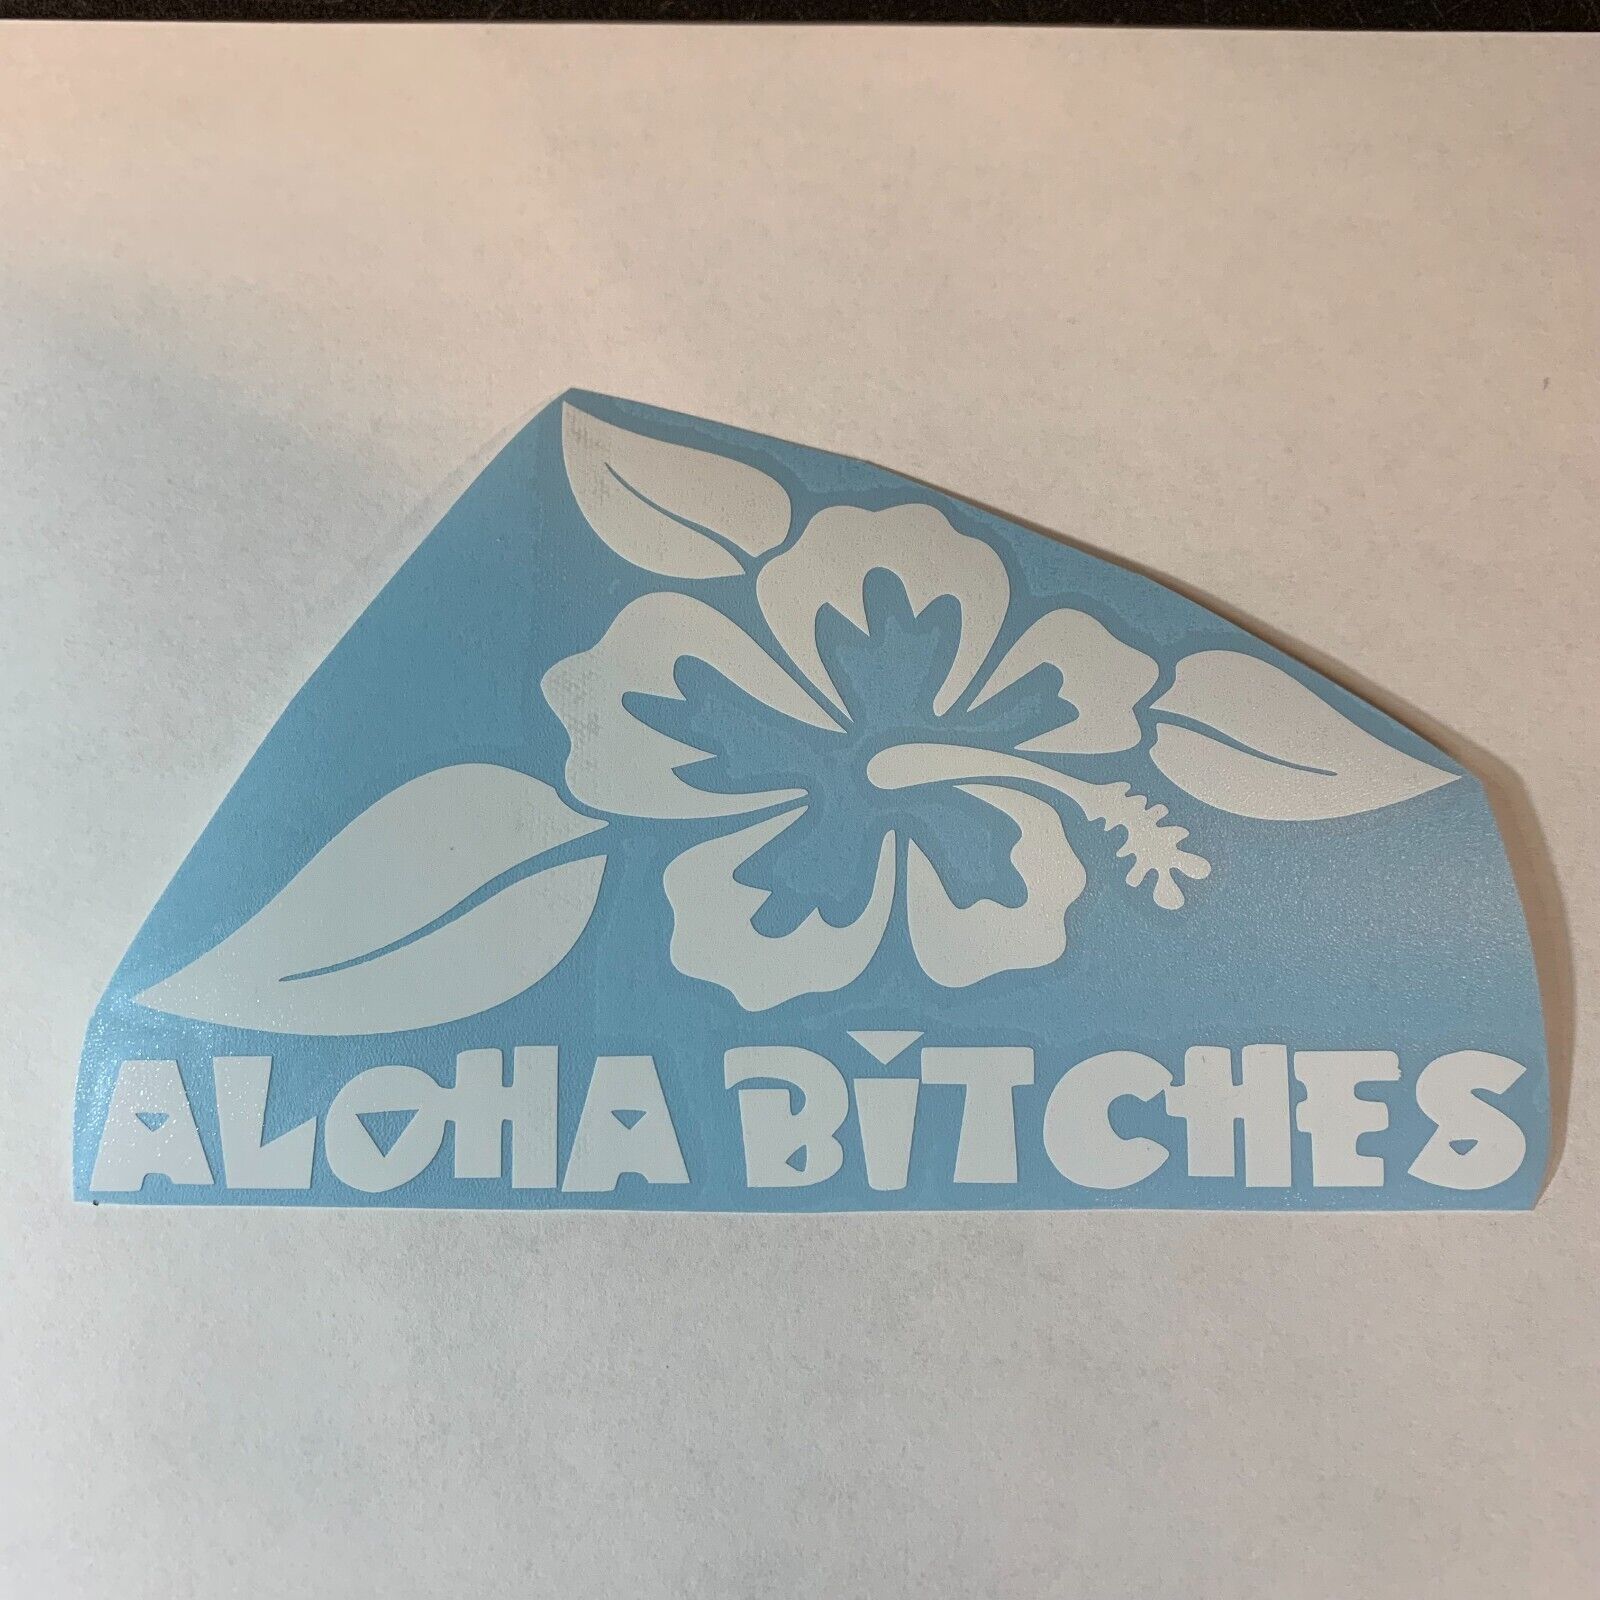 Aloha Bitches Cute Funny High Quality Die Cut Vinyl Decal Outdoor Sticker Beach